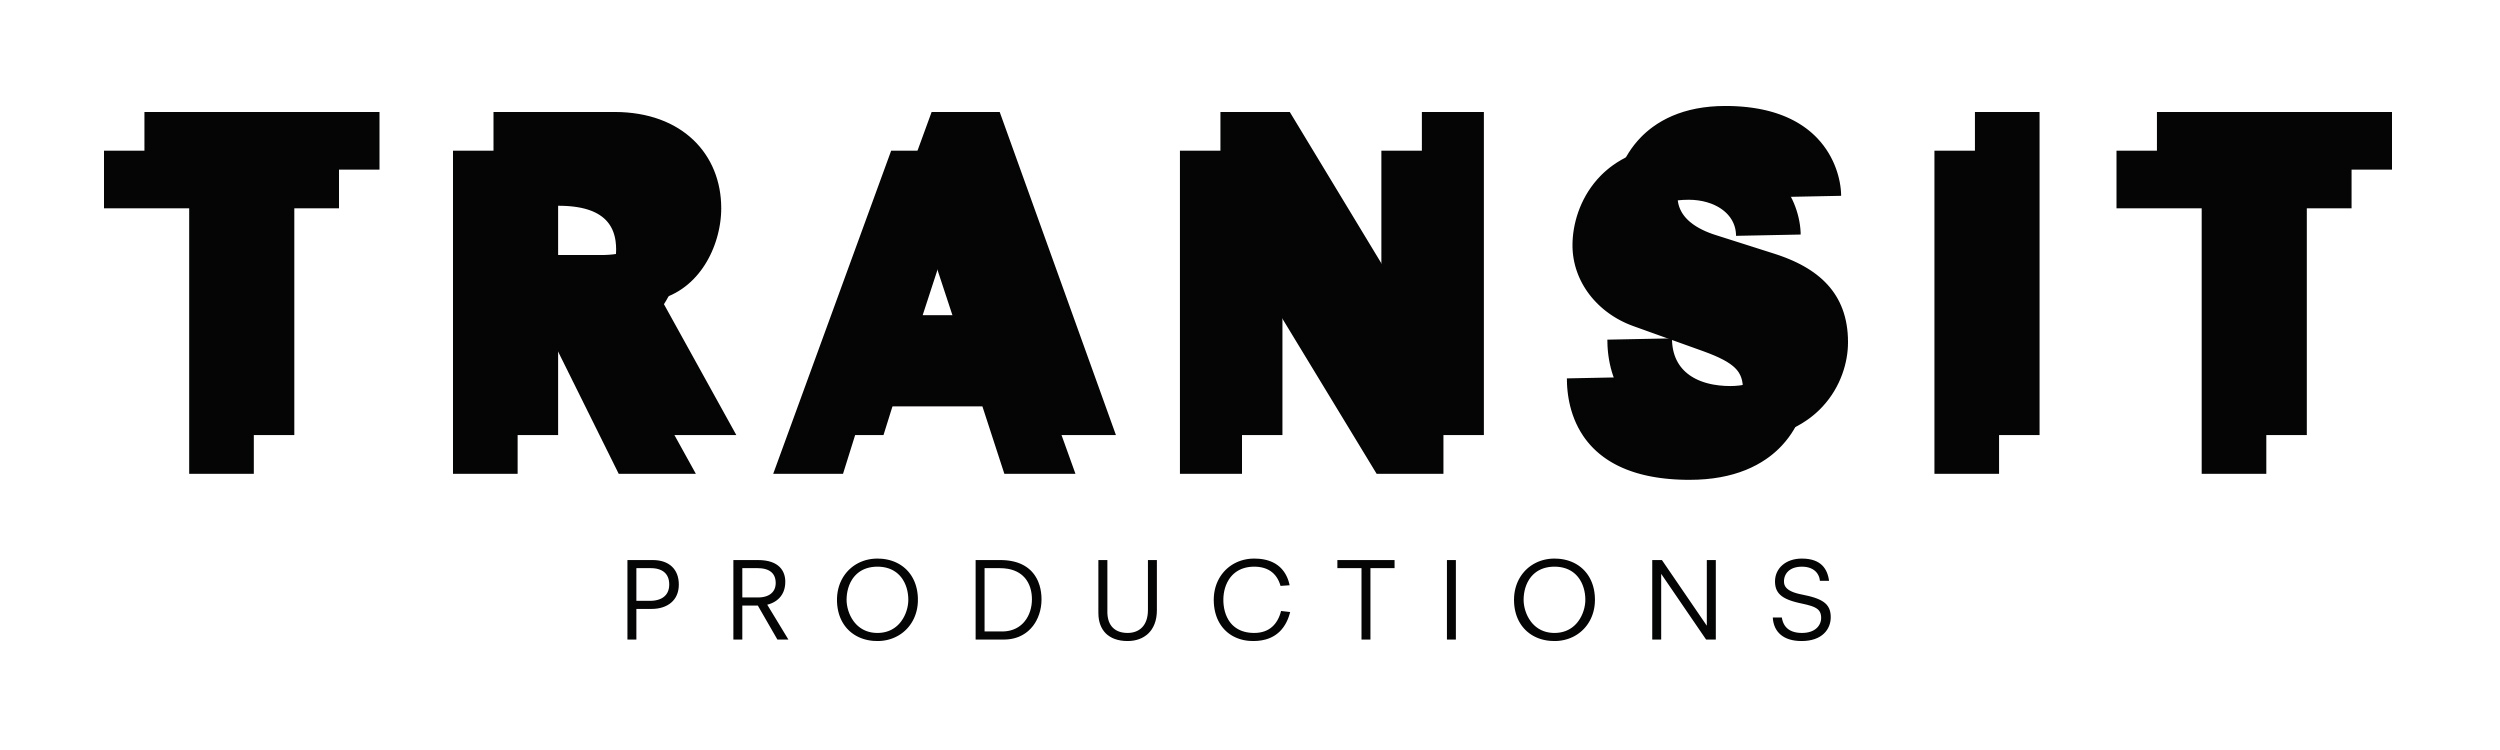 Transit Productions